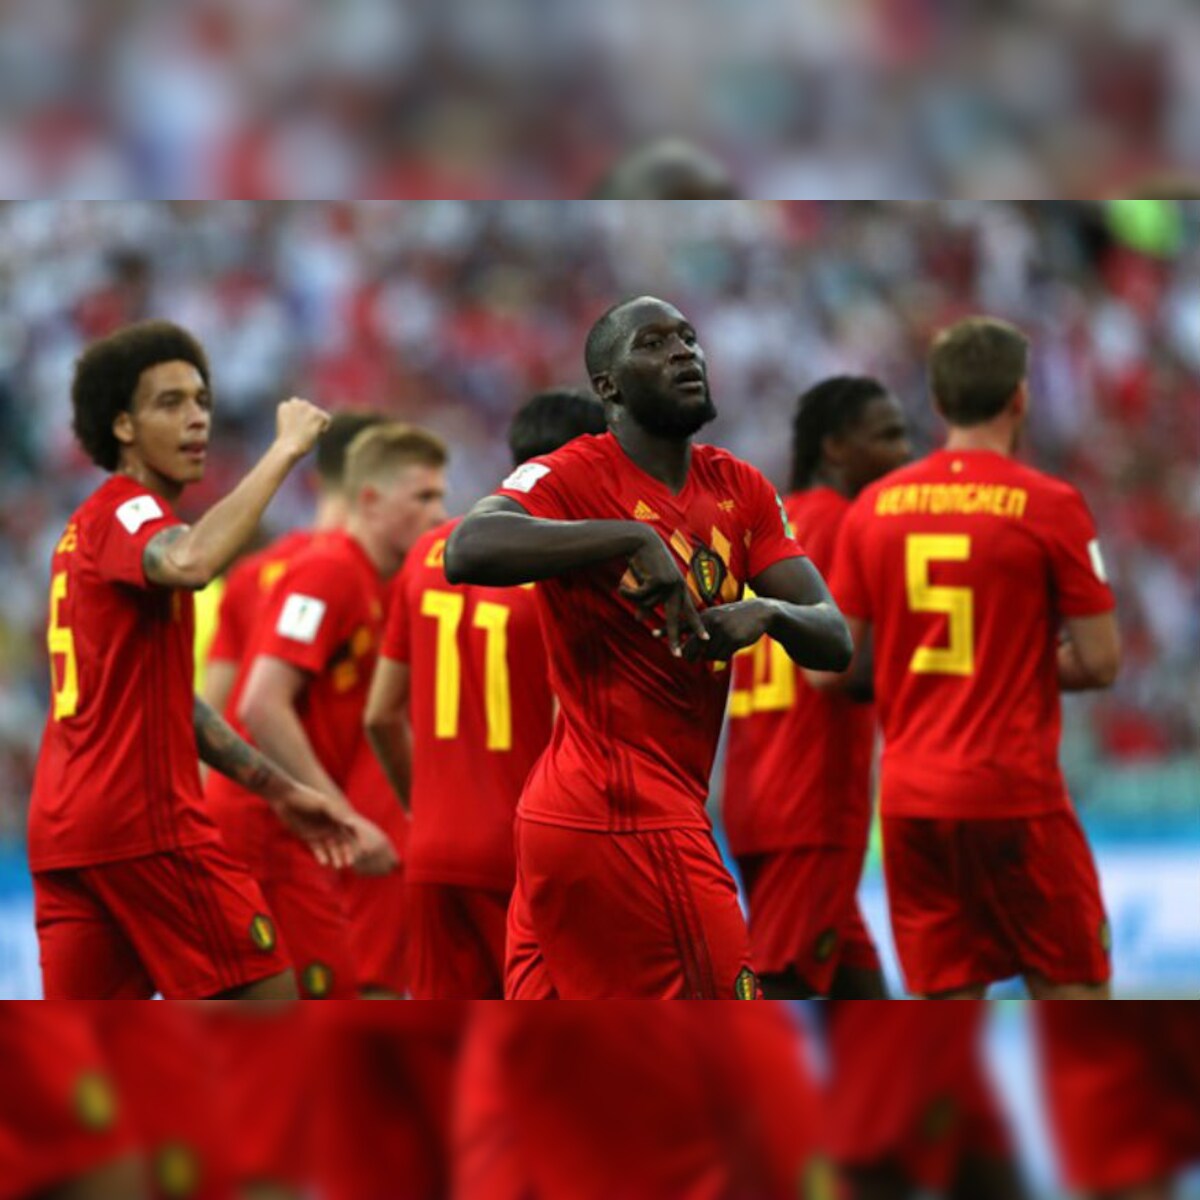 Fifa World Cup 18 Belgium Vs Panama Highlights As It Happened